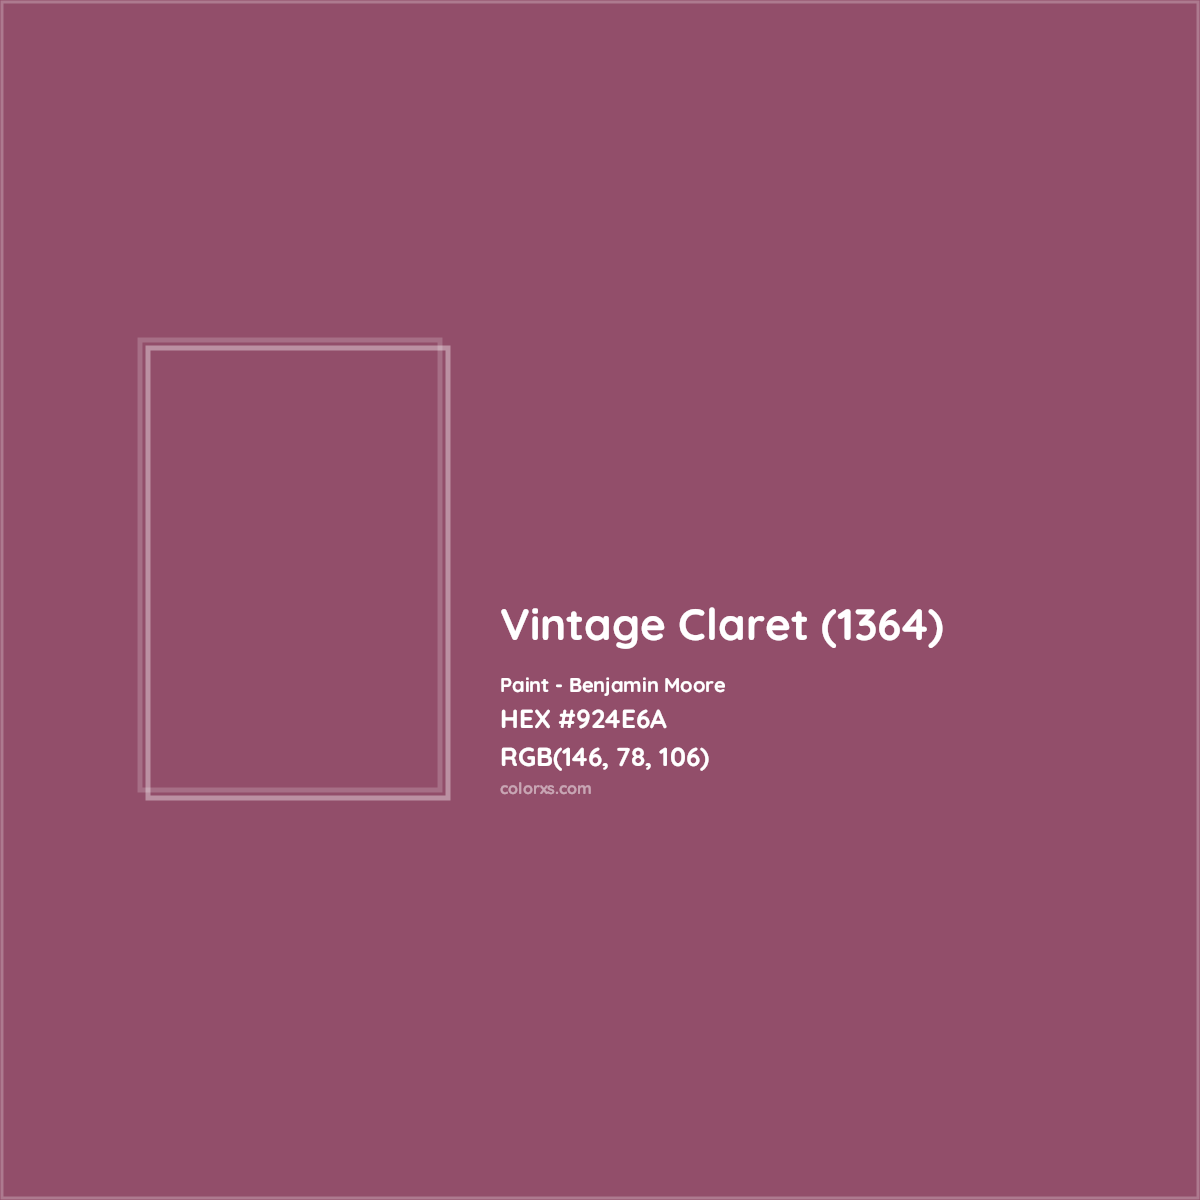 HEX #924E6A Vintage Claret (1364) Paint Benjamin Moore - Color Code